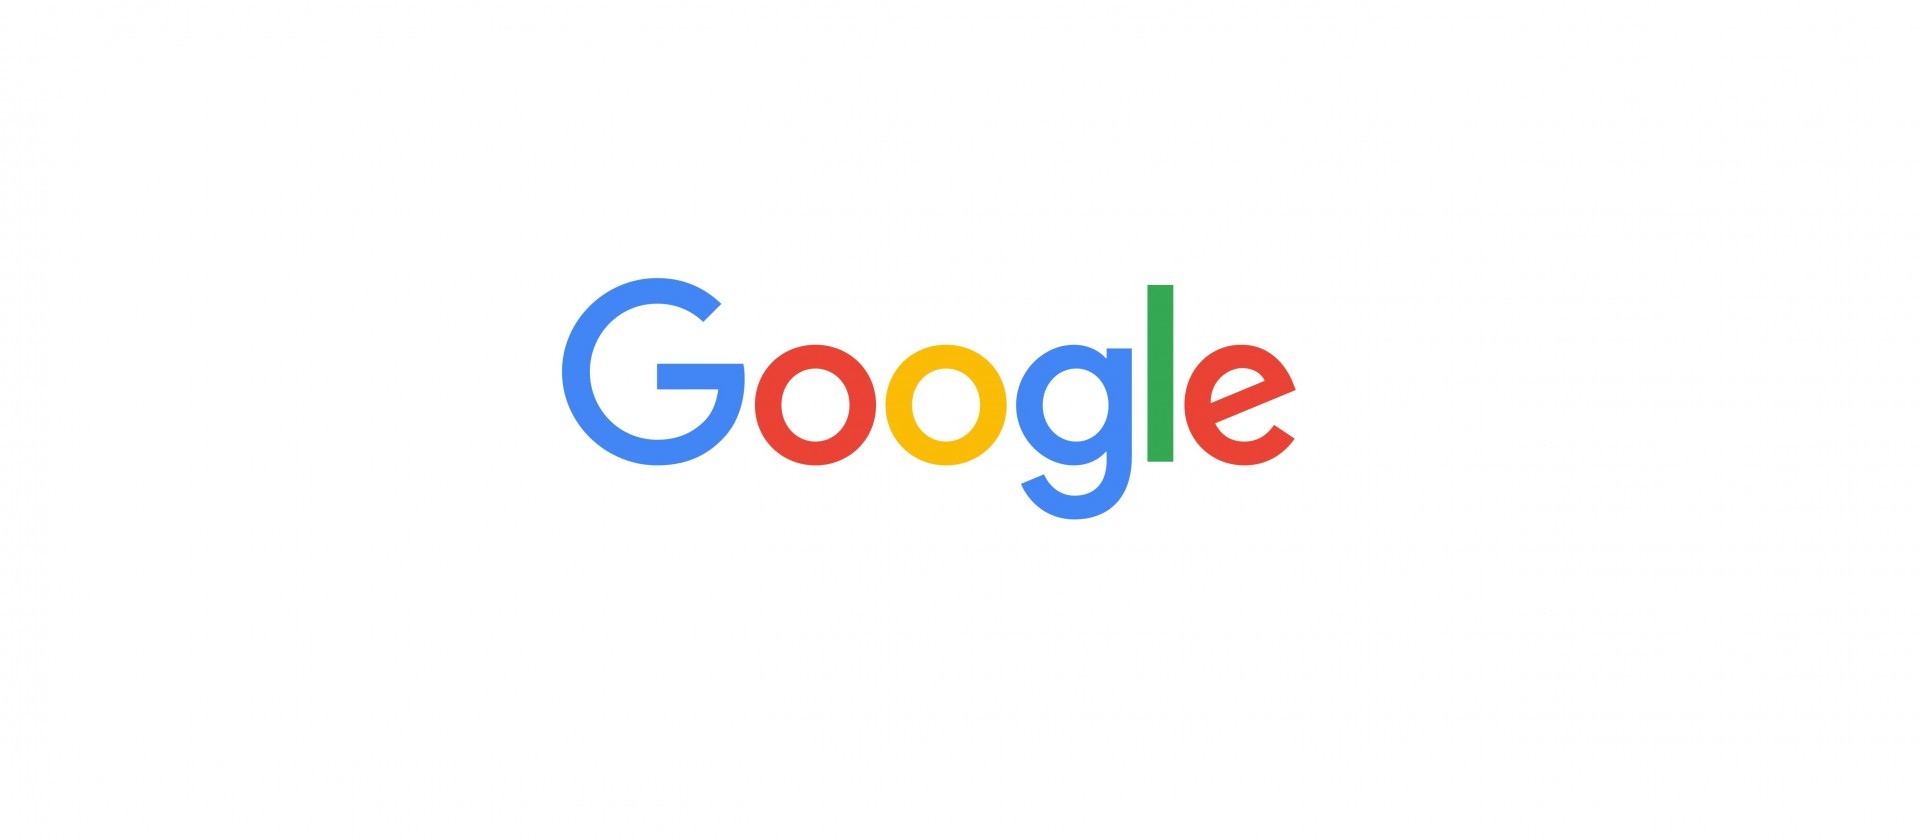 Google 与开发者就 Google Play 商店诉讼达成和解 将设立 9,000 万美元基金协助小型开发者